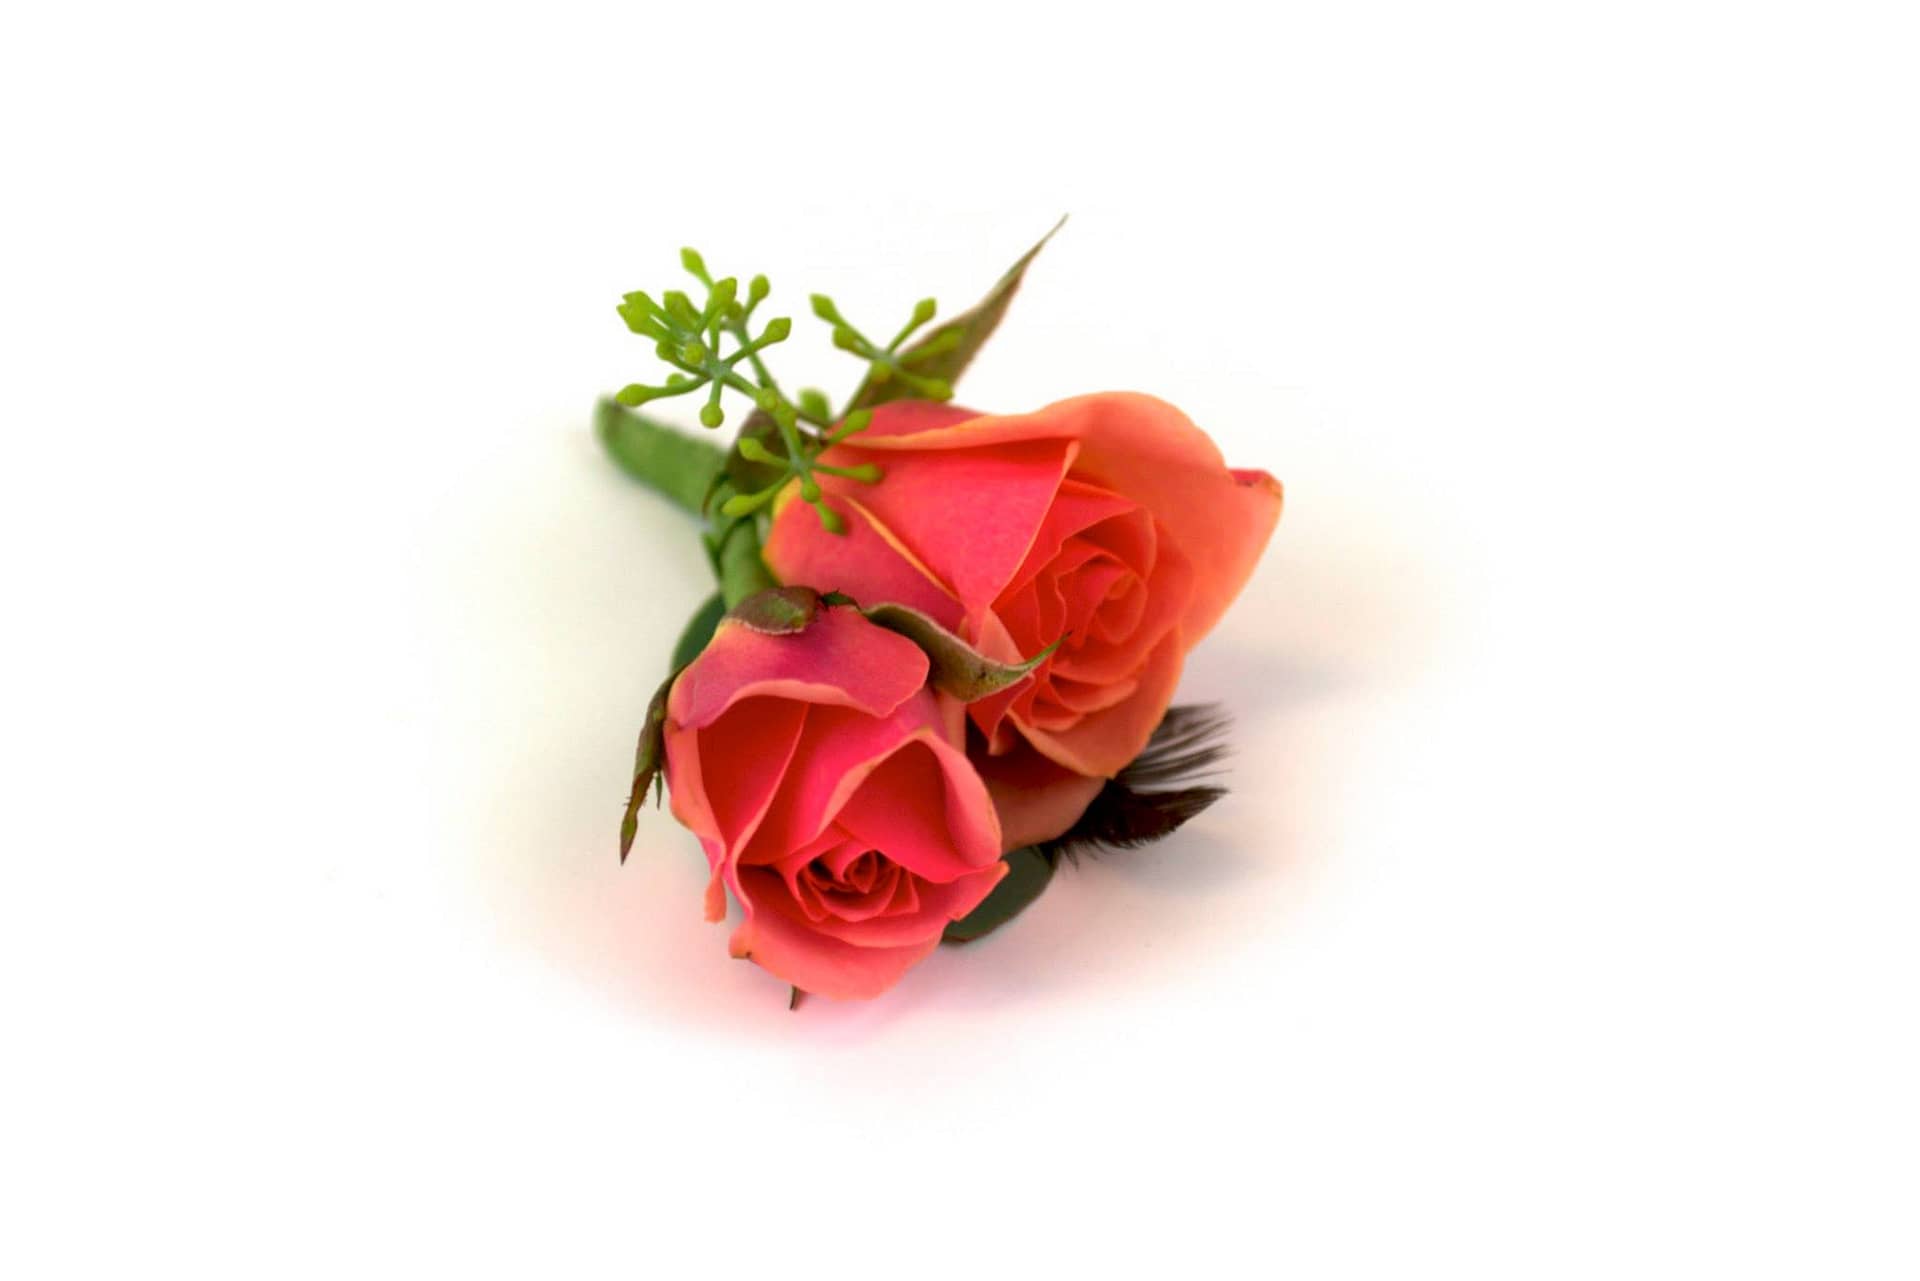 minneapolis-florist-wedding-orange-rose